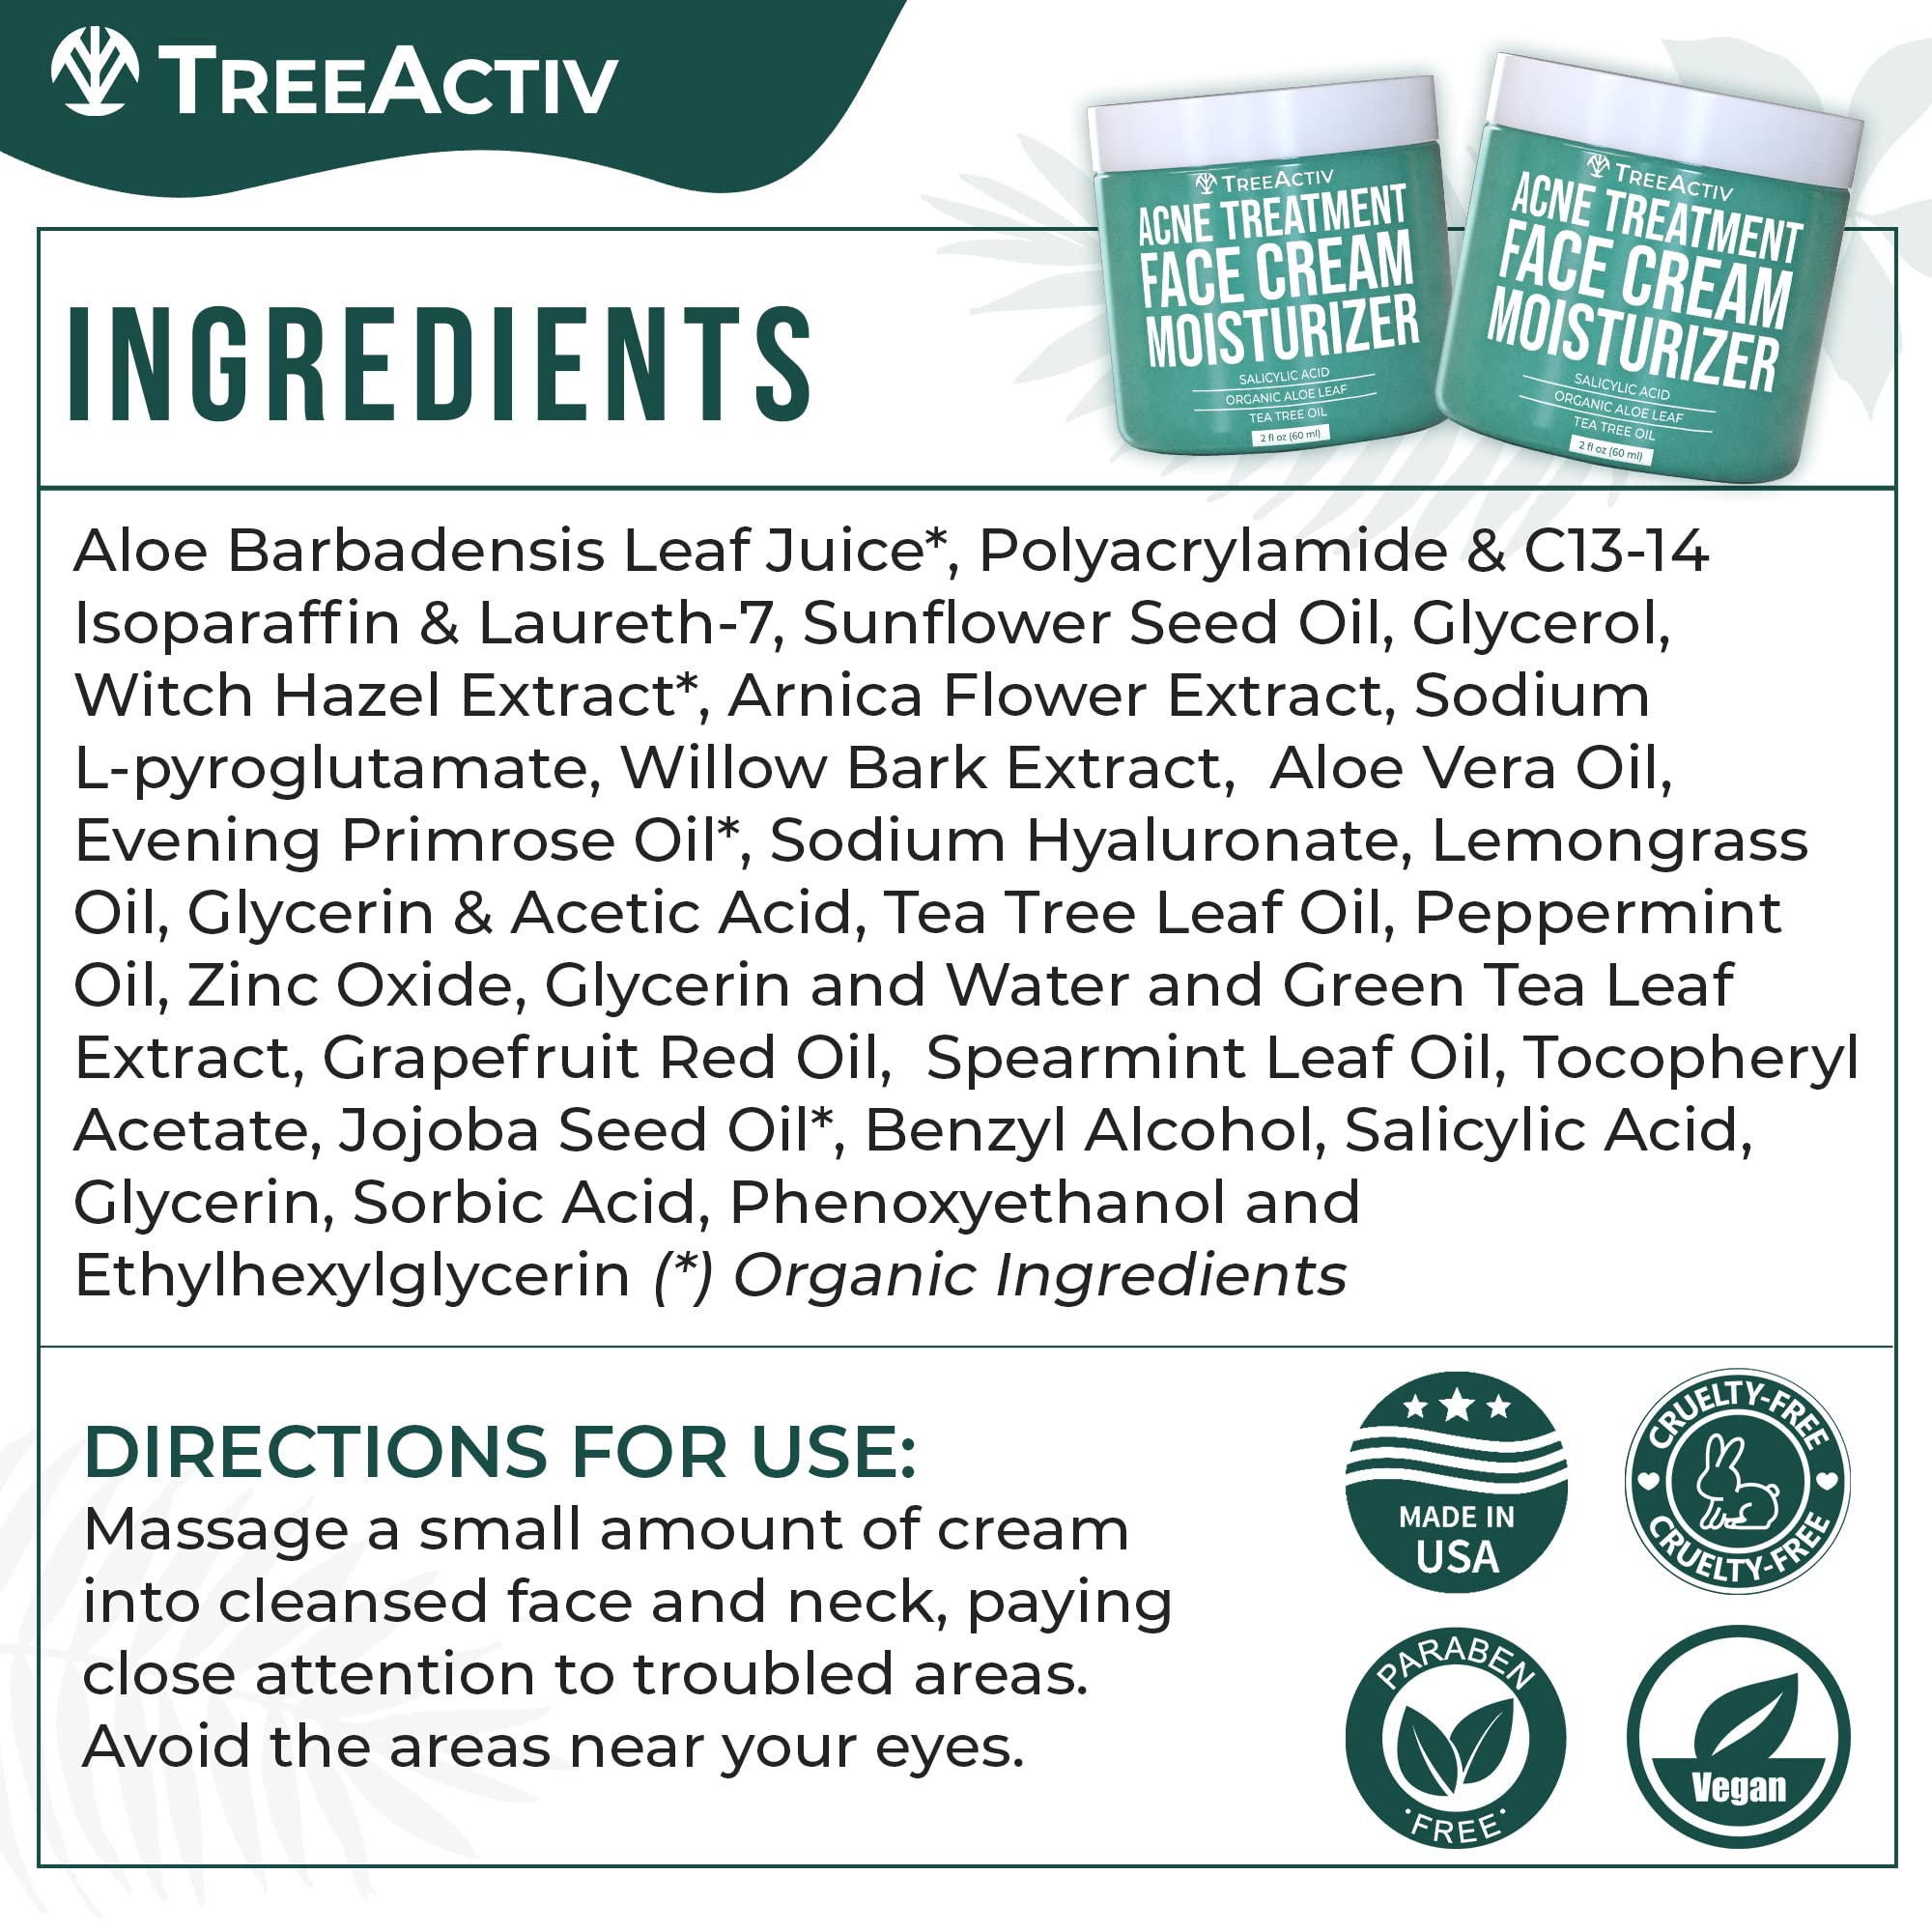 TreeActiv Salicylic Acid Face Moisturizer, 2 fl oz, Acne Treatment Face Cream for Oily Skin with and Tea Tree Oil, For Teens and